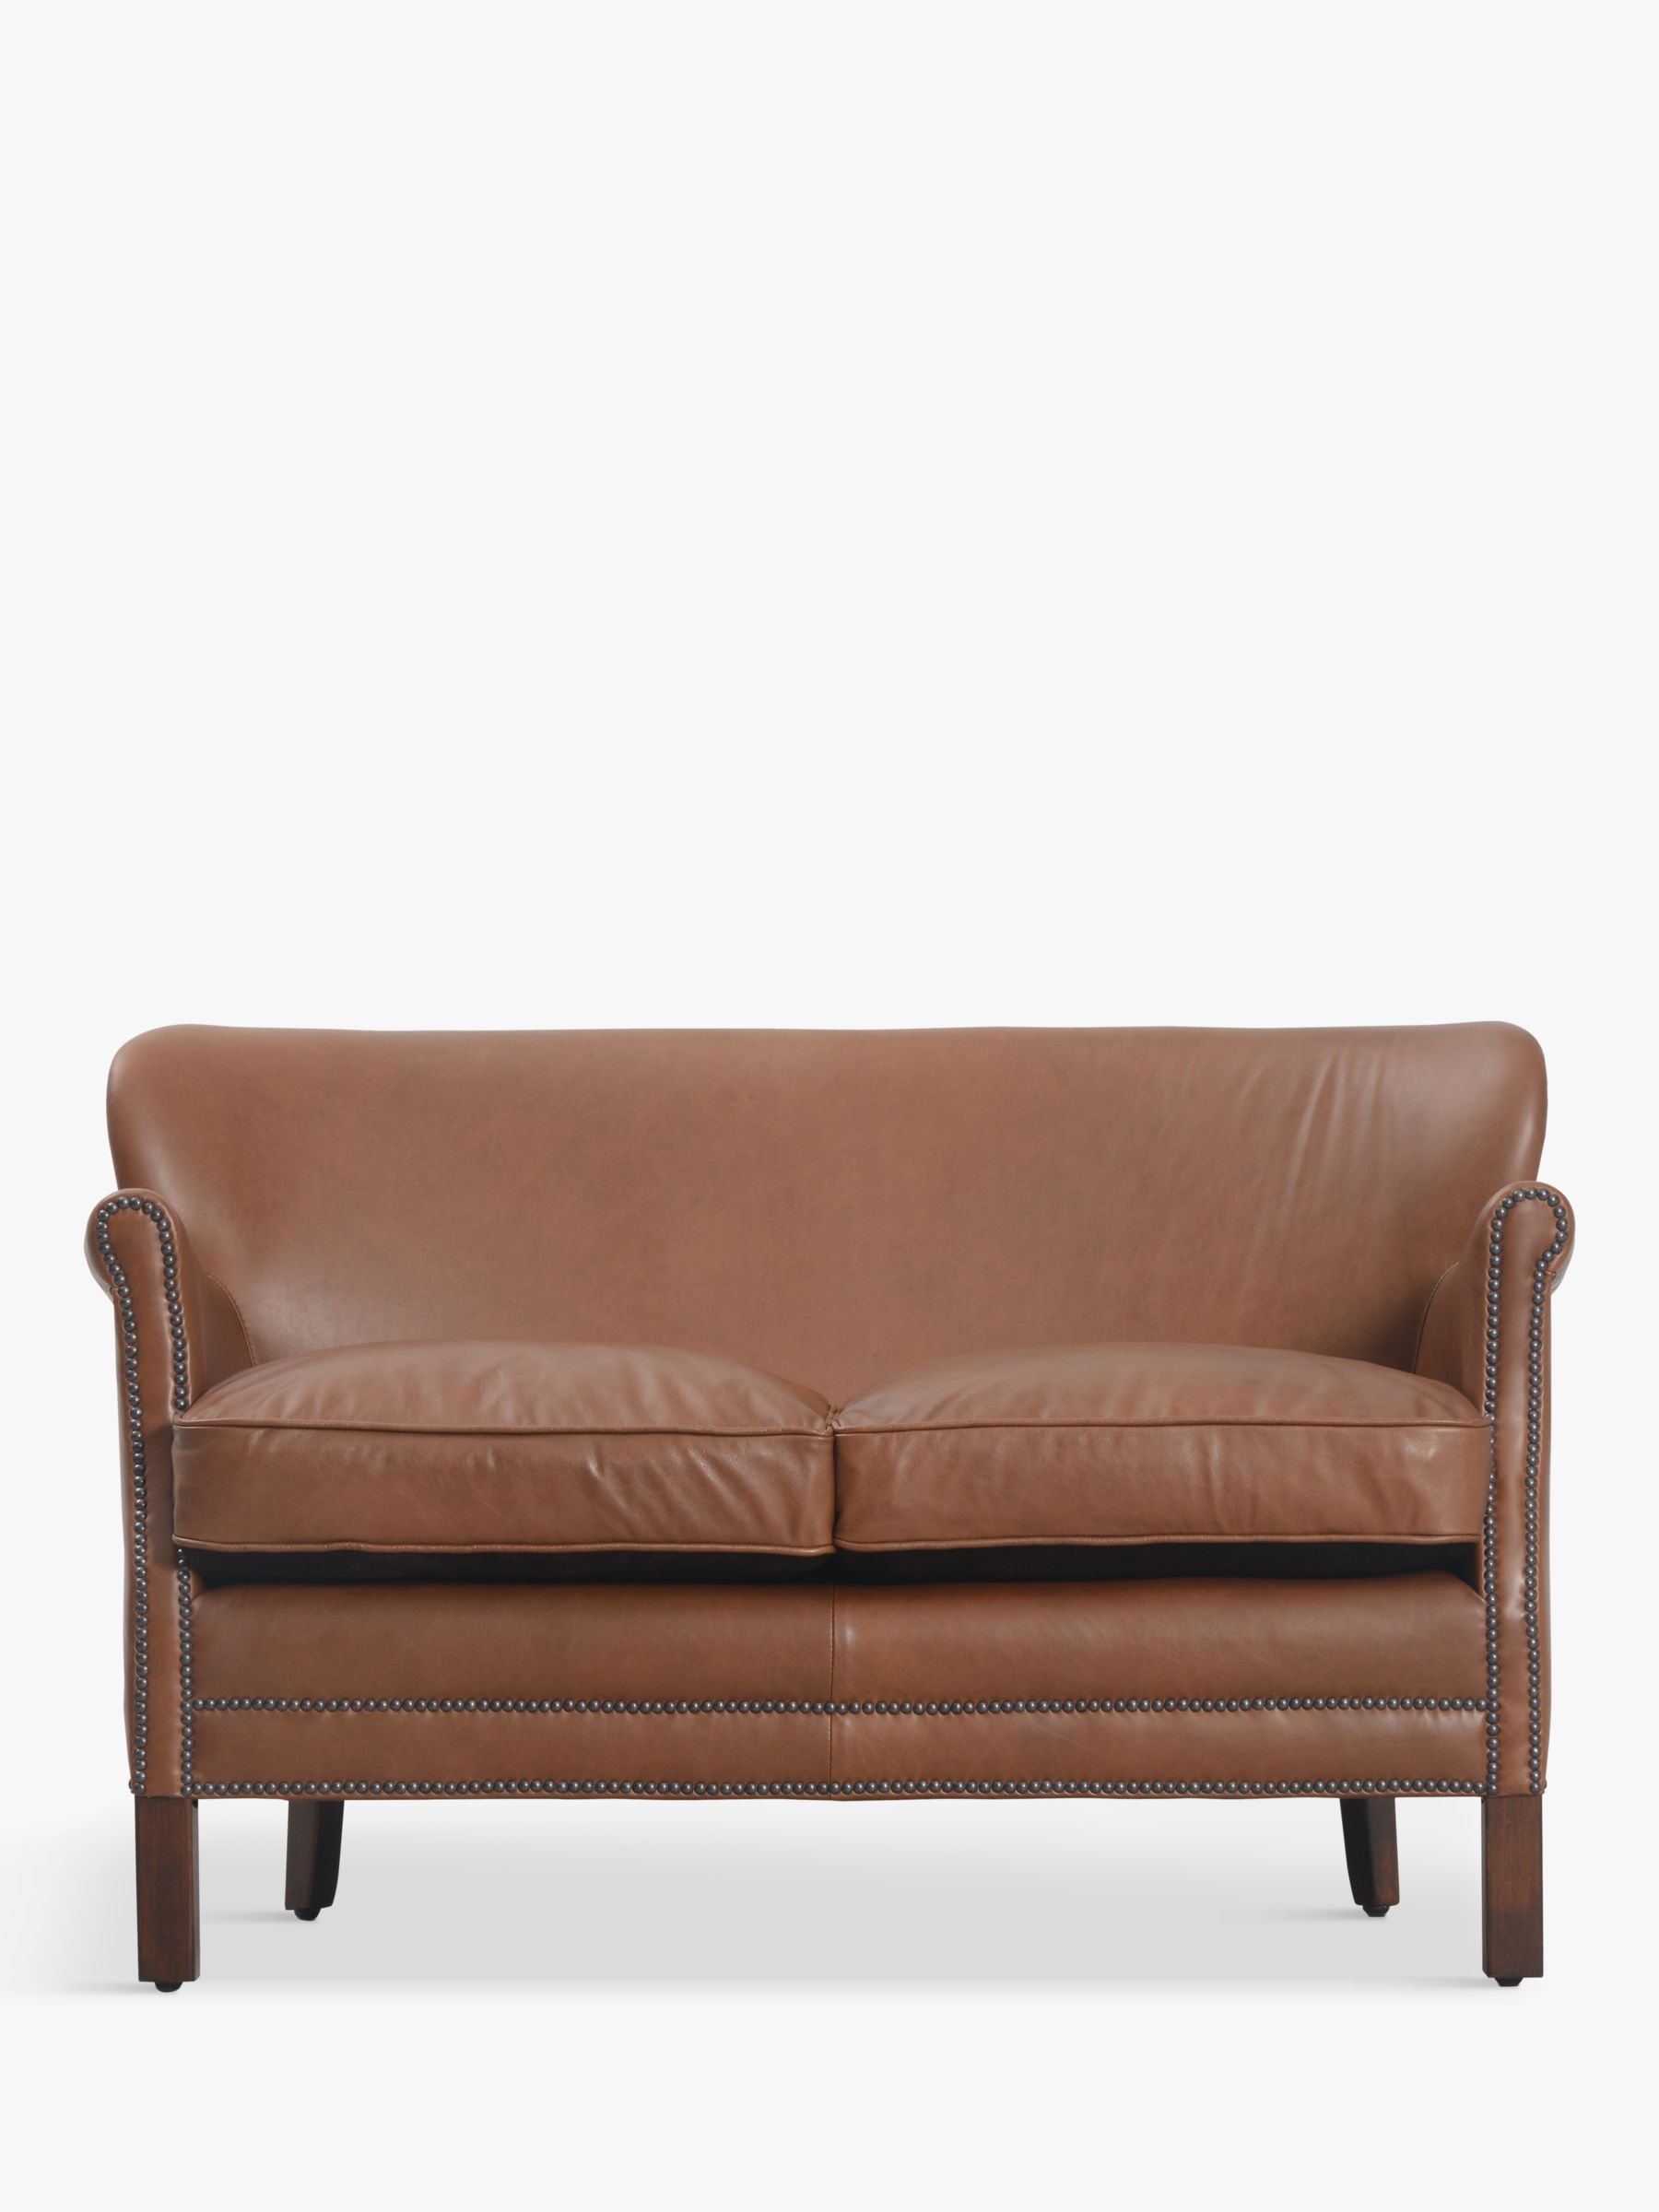 Photo of Halo little professor small 2 seater leather sofa